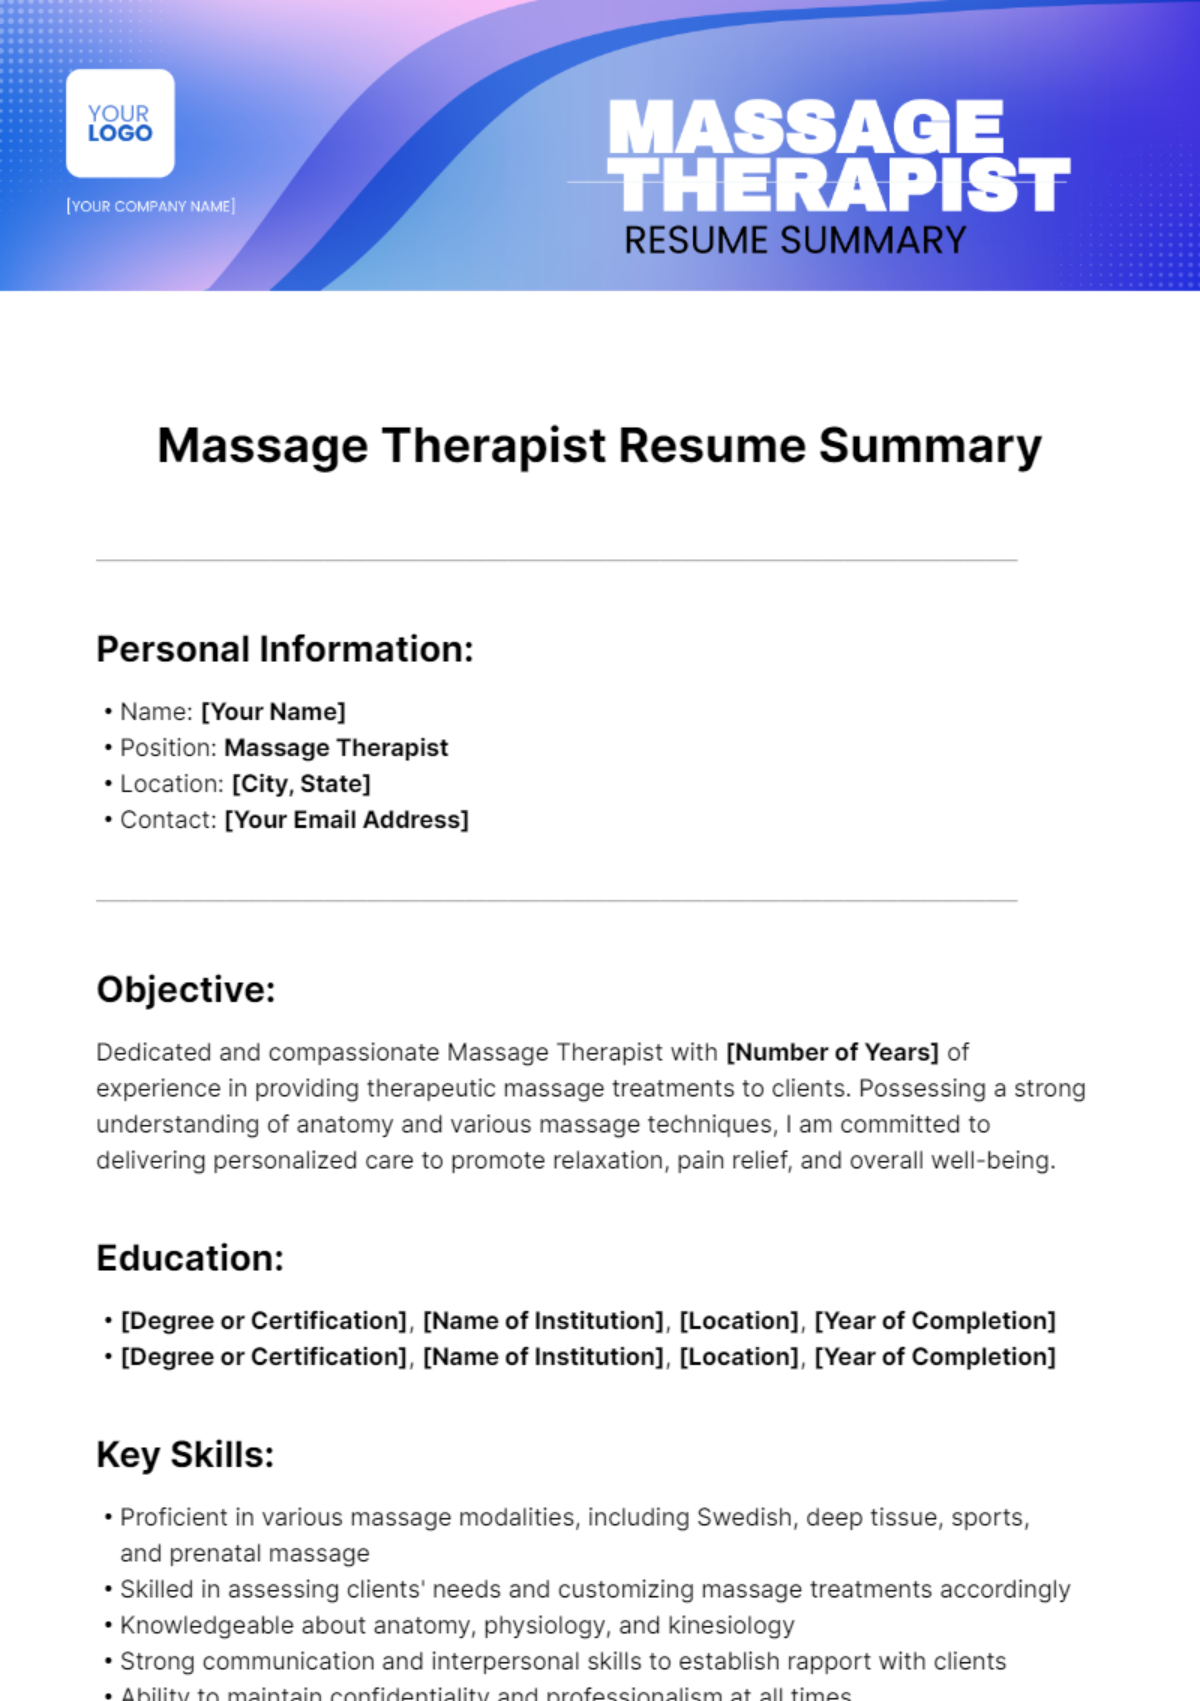 Massage Therapist Resume Summary Template